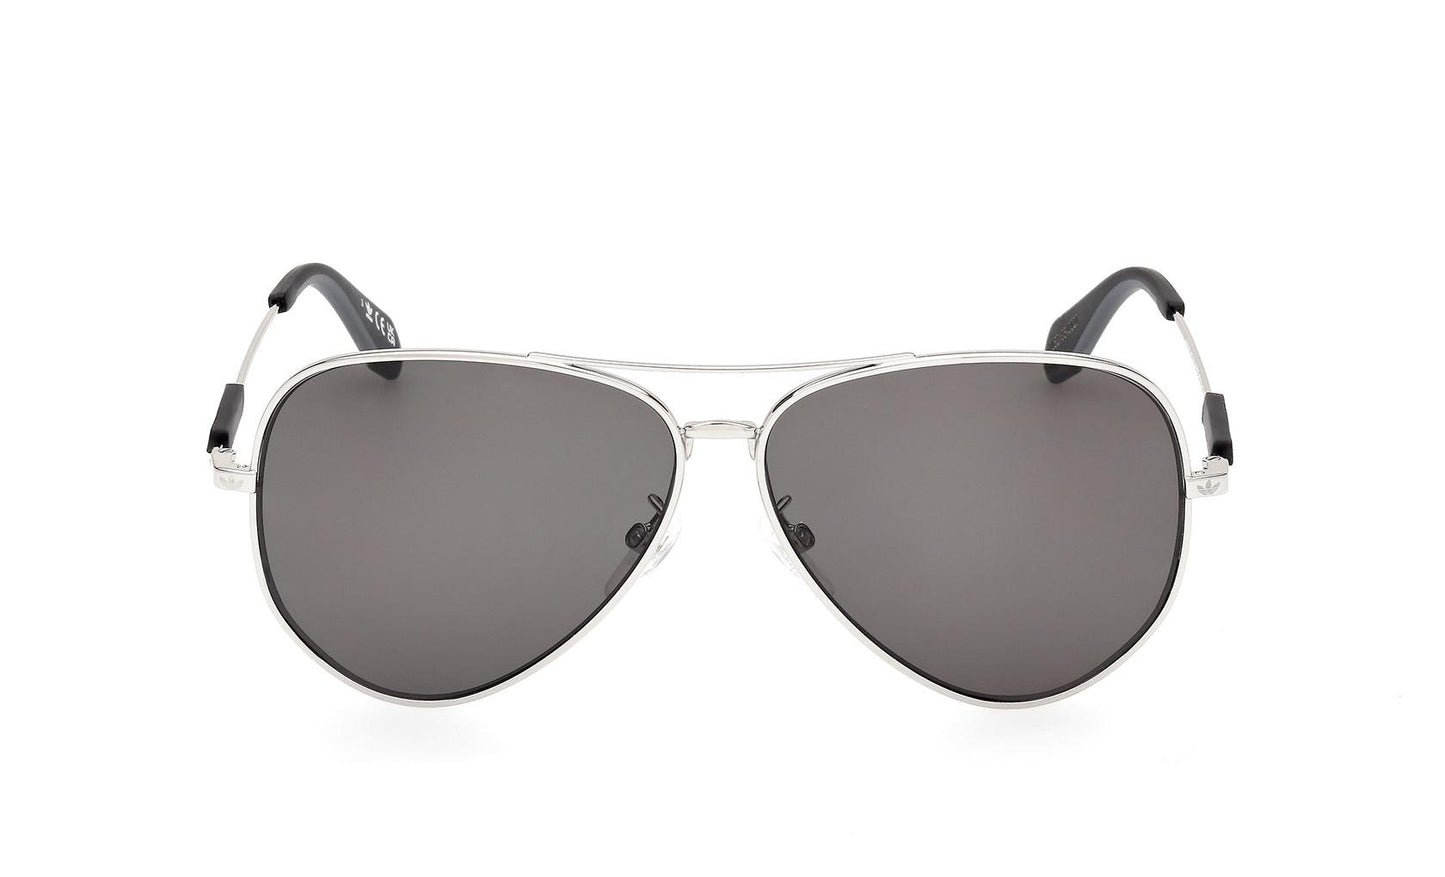 Adidas Originals Sunglasses OR0085 16D